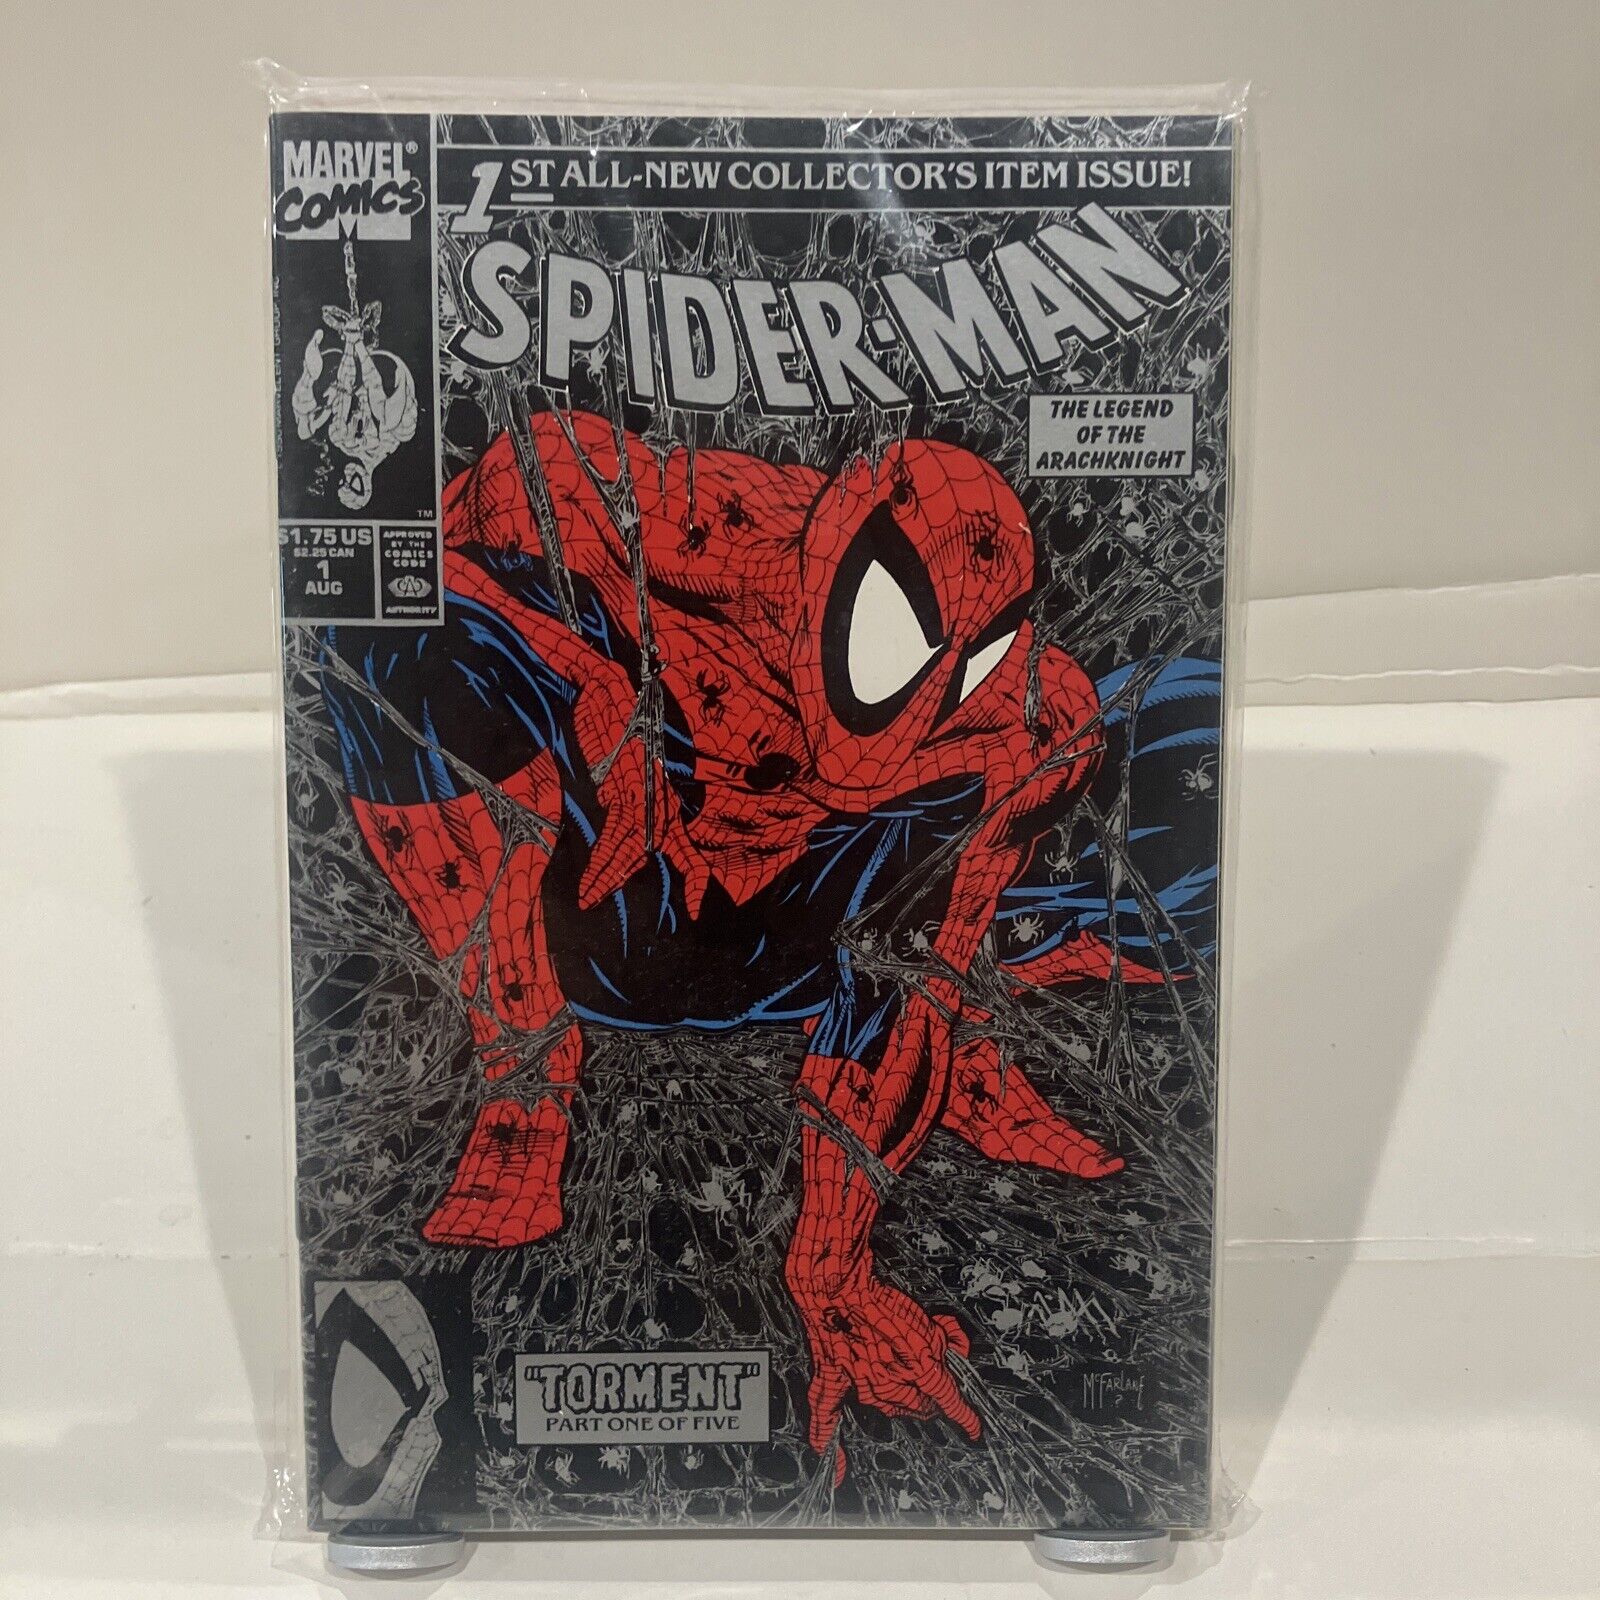 Spider-Man #1 (Marvel, August 1990) Black Cover